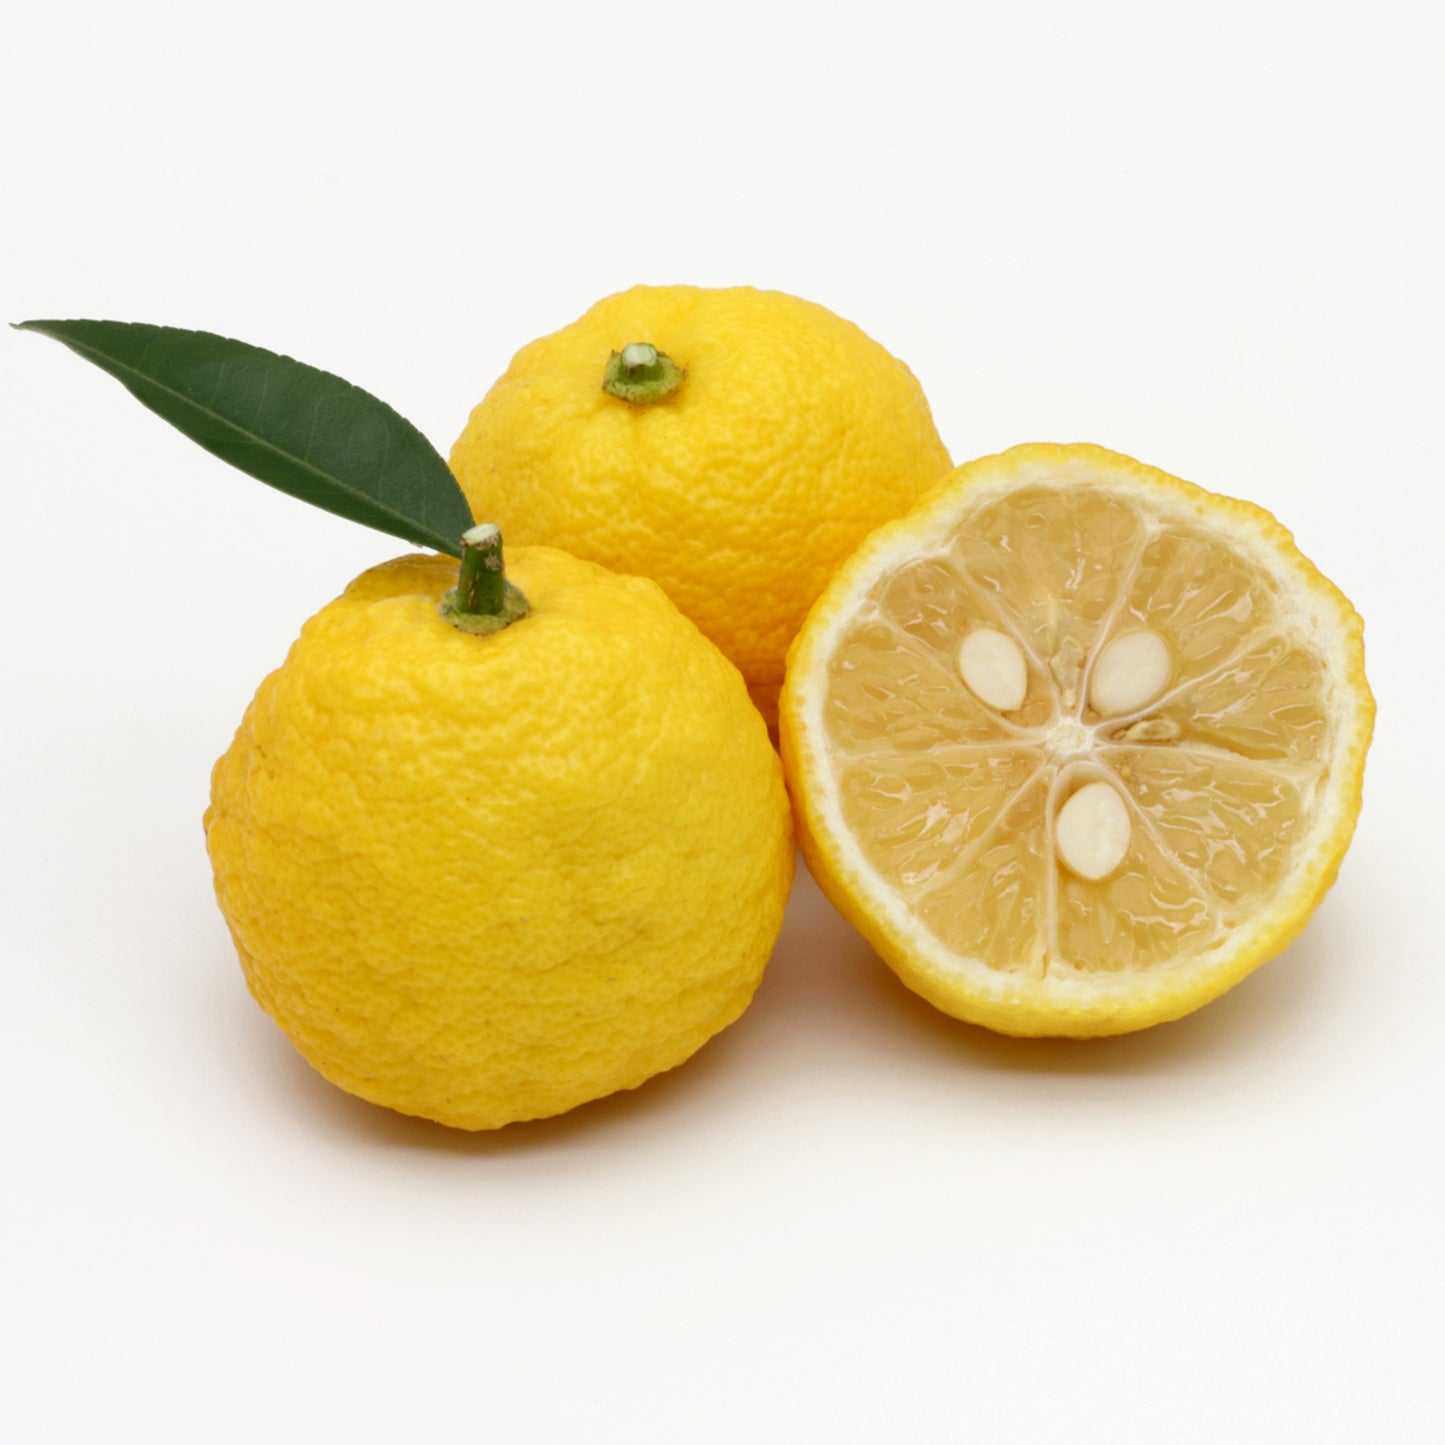 Yuzu (Japanese citrus fruit)